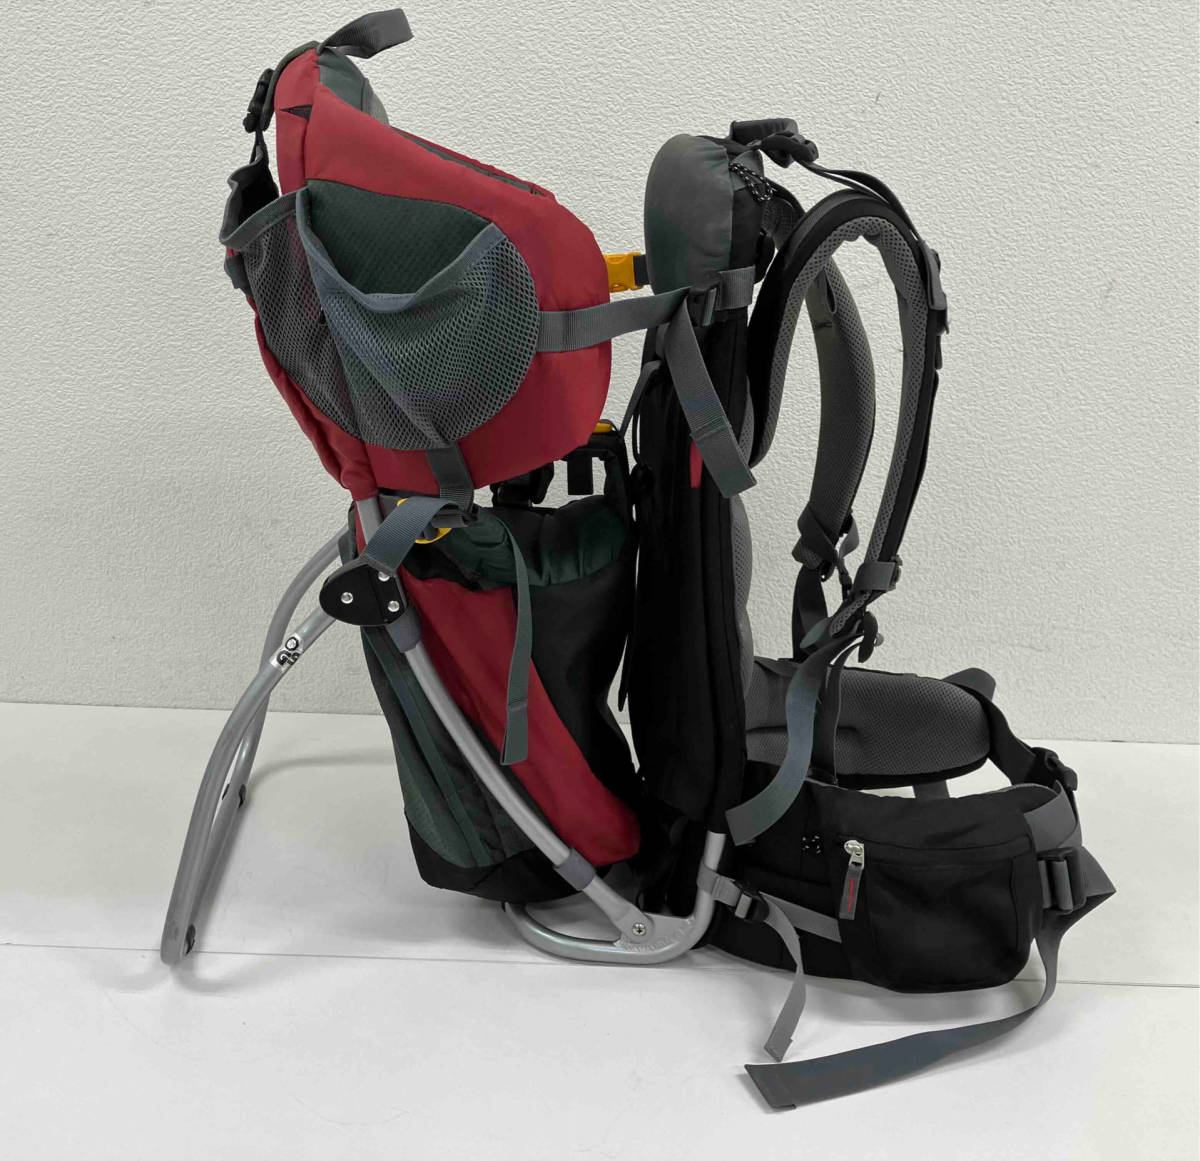 Deuter Deuter kid ConfortⅡ Kid ko- four to rack for carrying loads backpack 